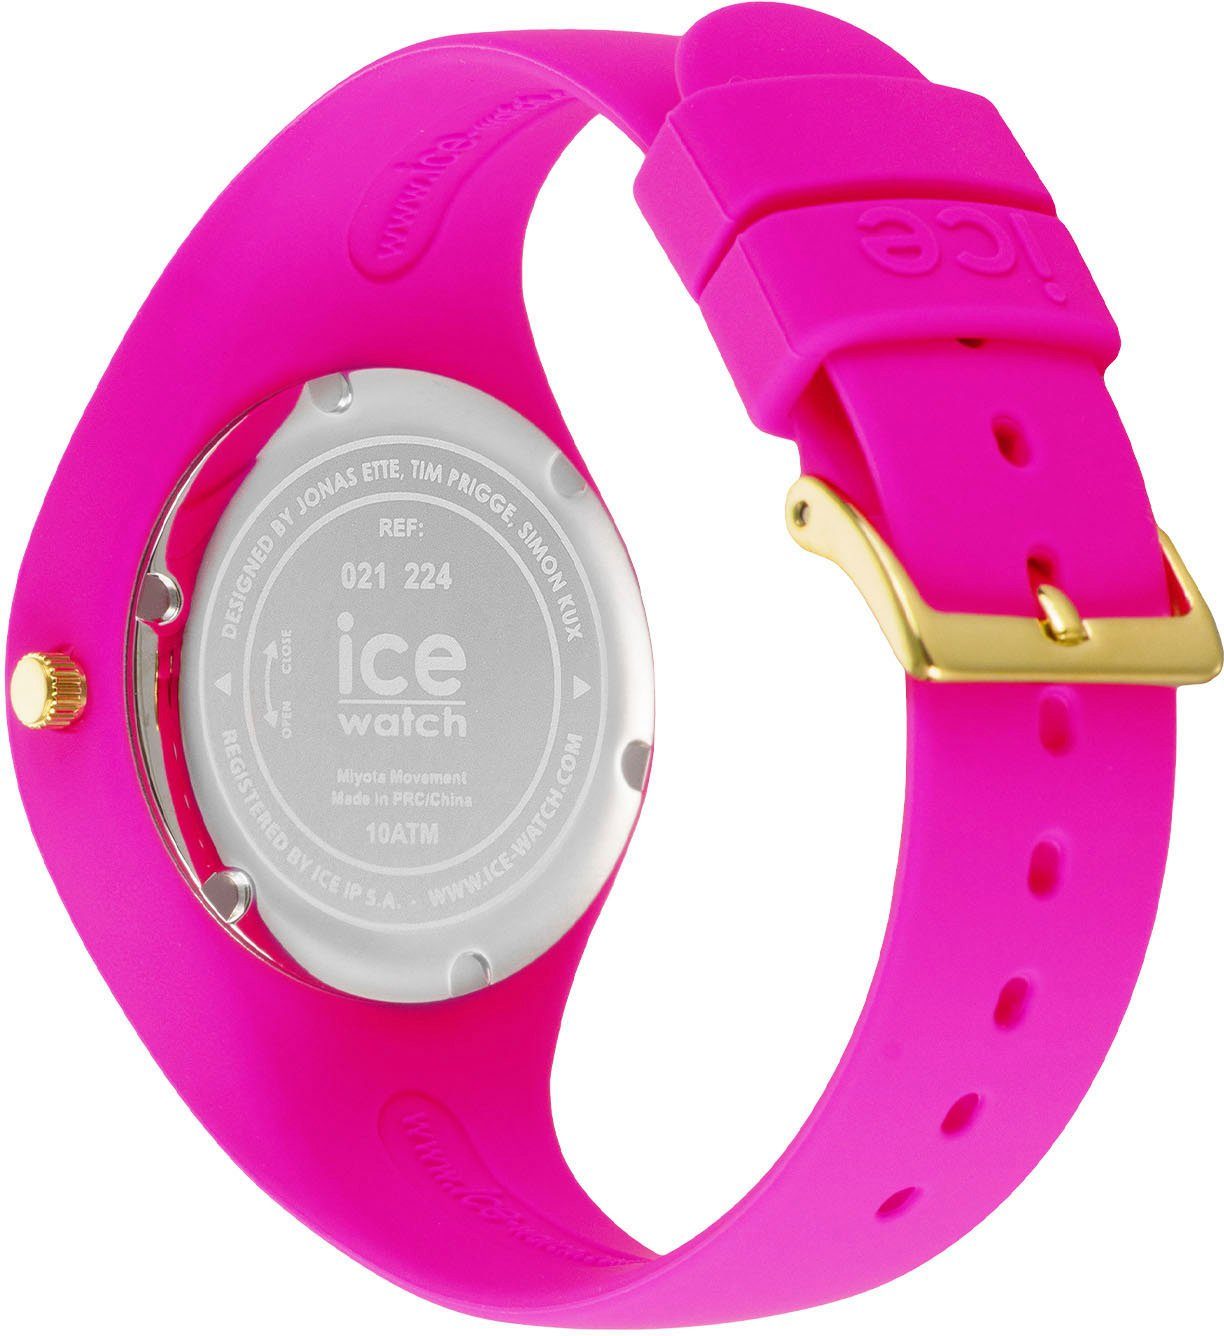 ice-watch Quarzuhr ICE Small Neon 3H, glitter rosa - 021224 pink - 